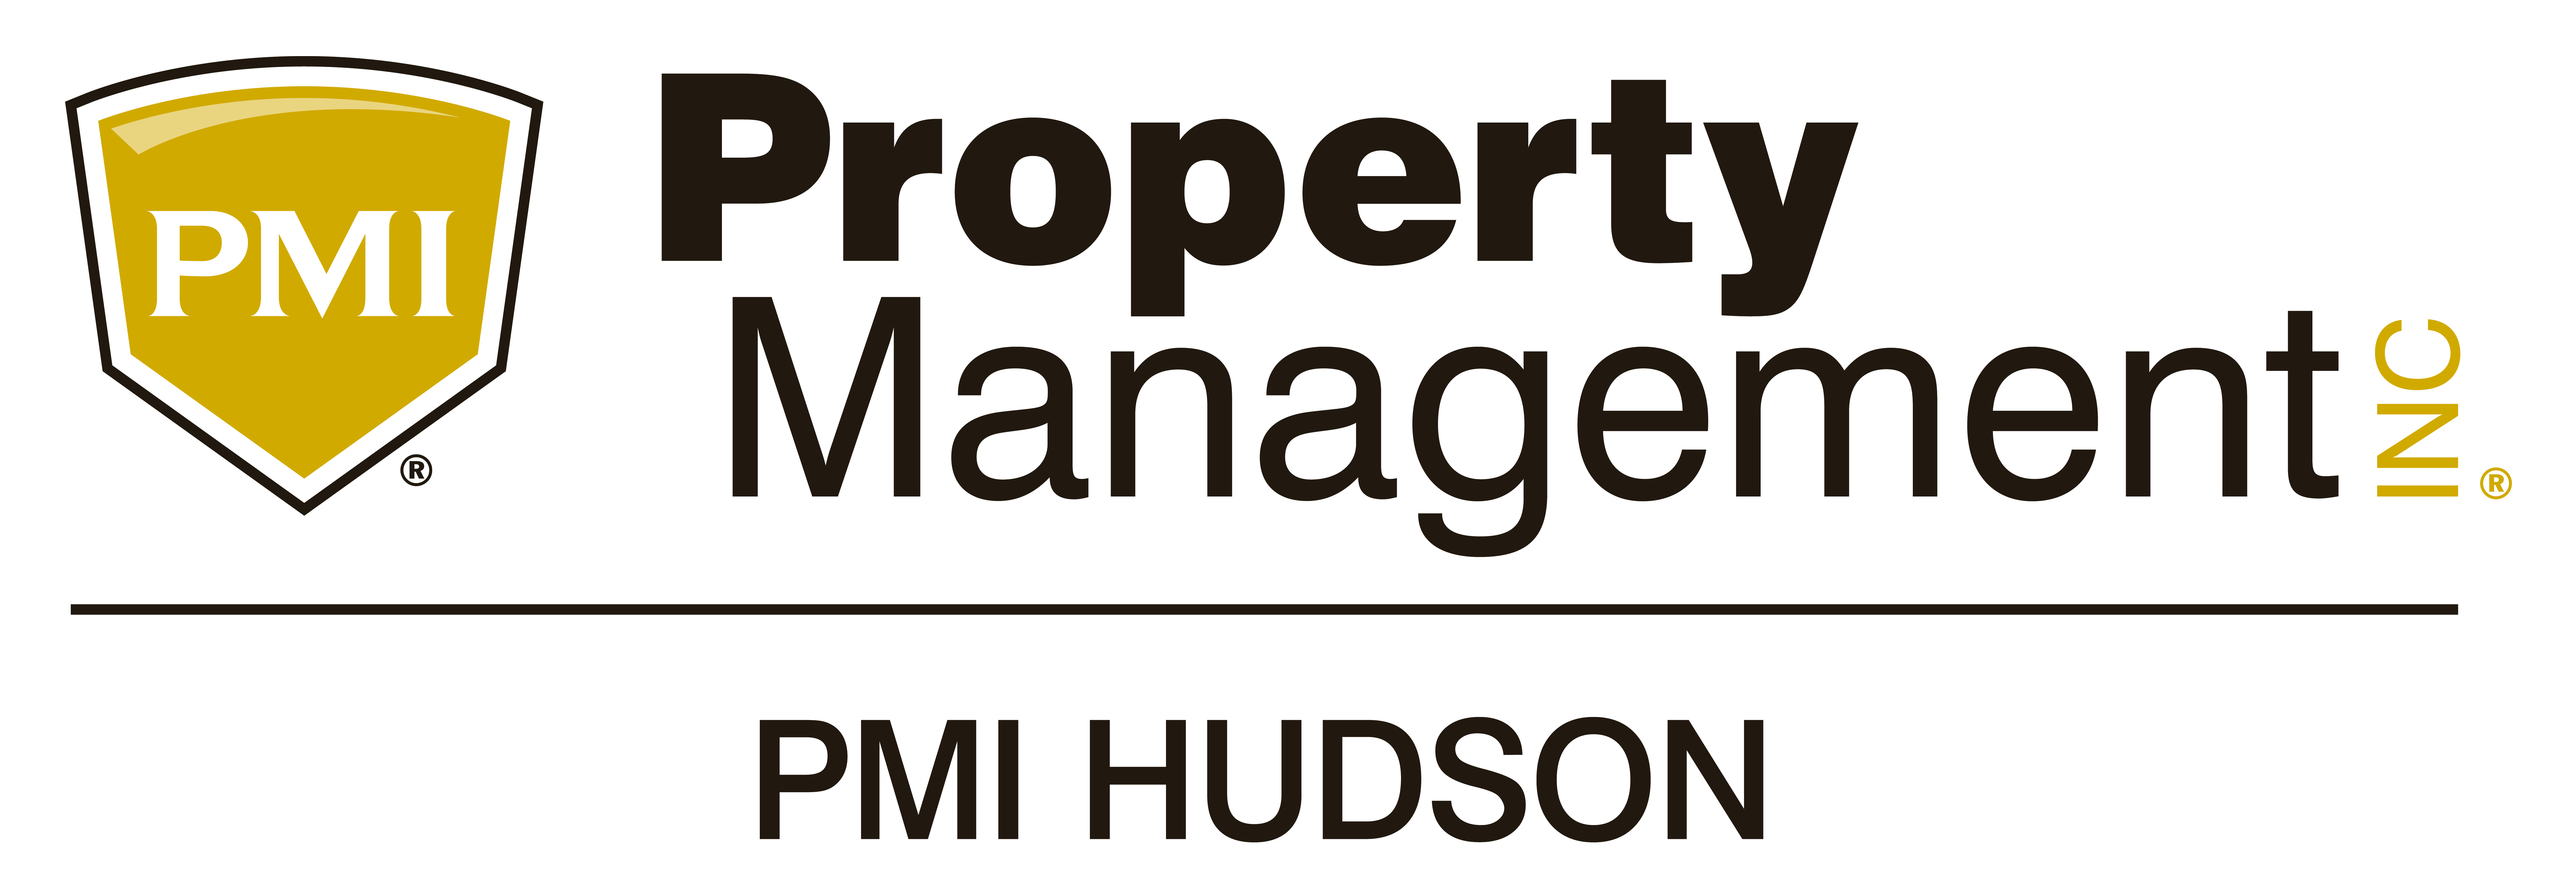 PMI Hudson Property Management - Associations logo